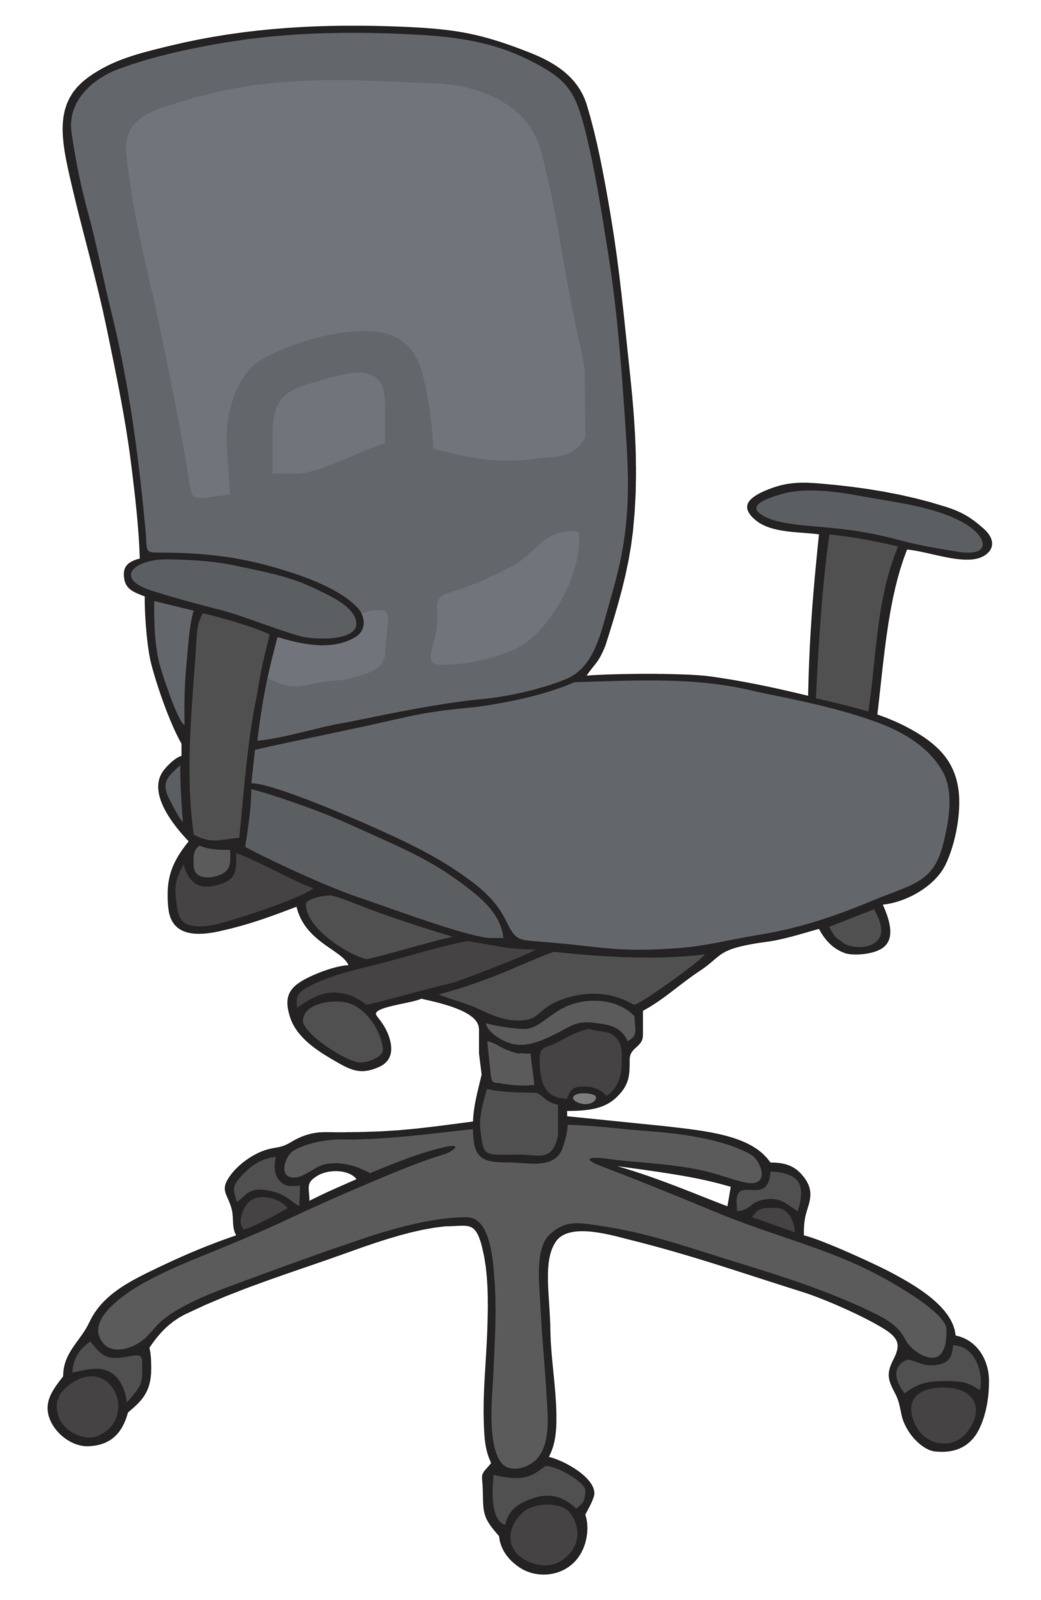 Hand drawing of a modern dark office armchair